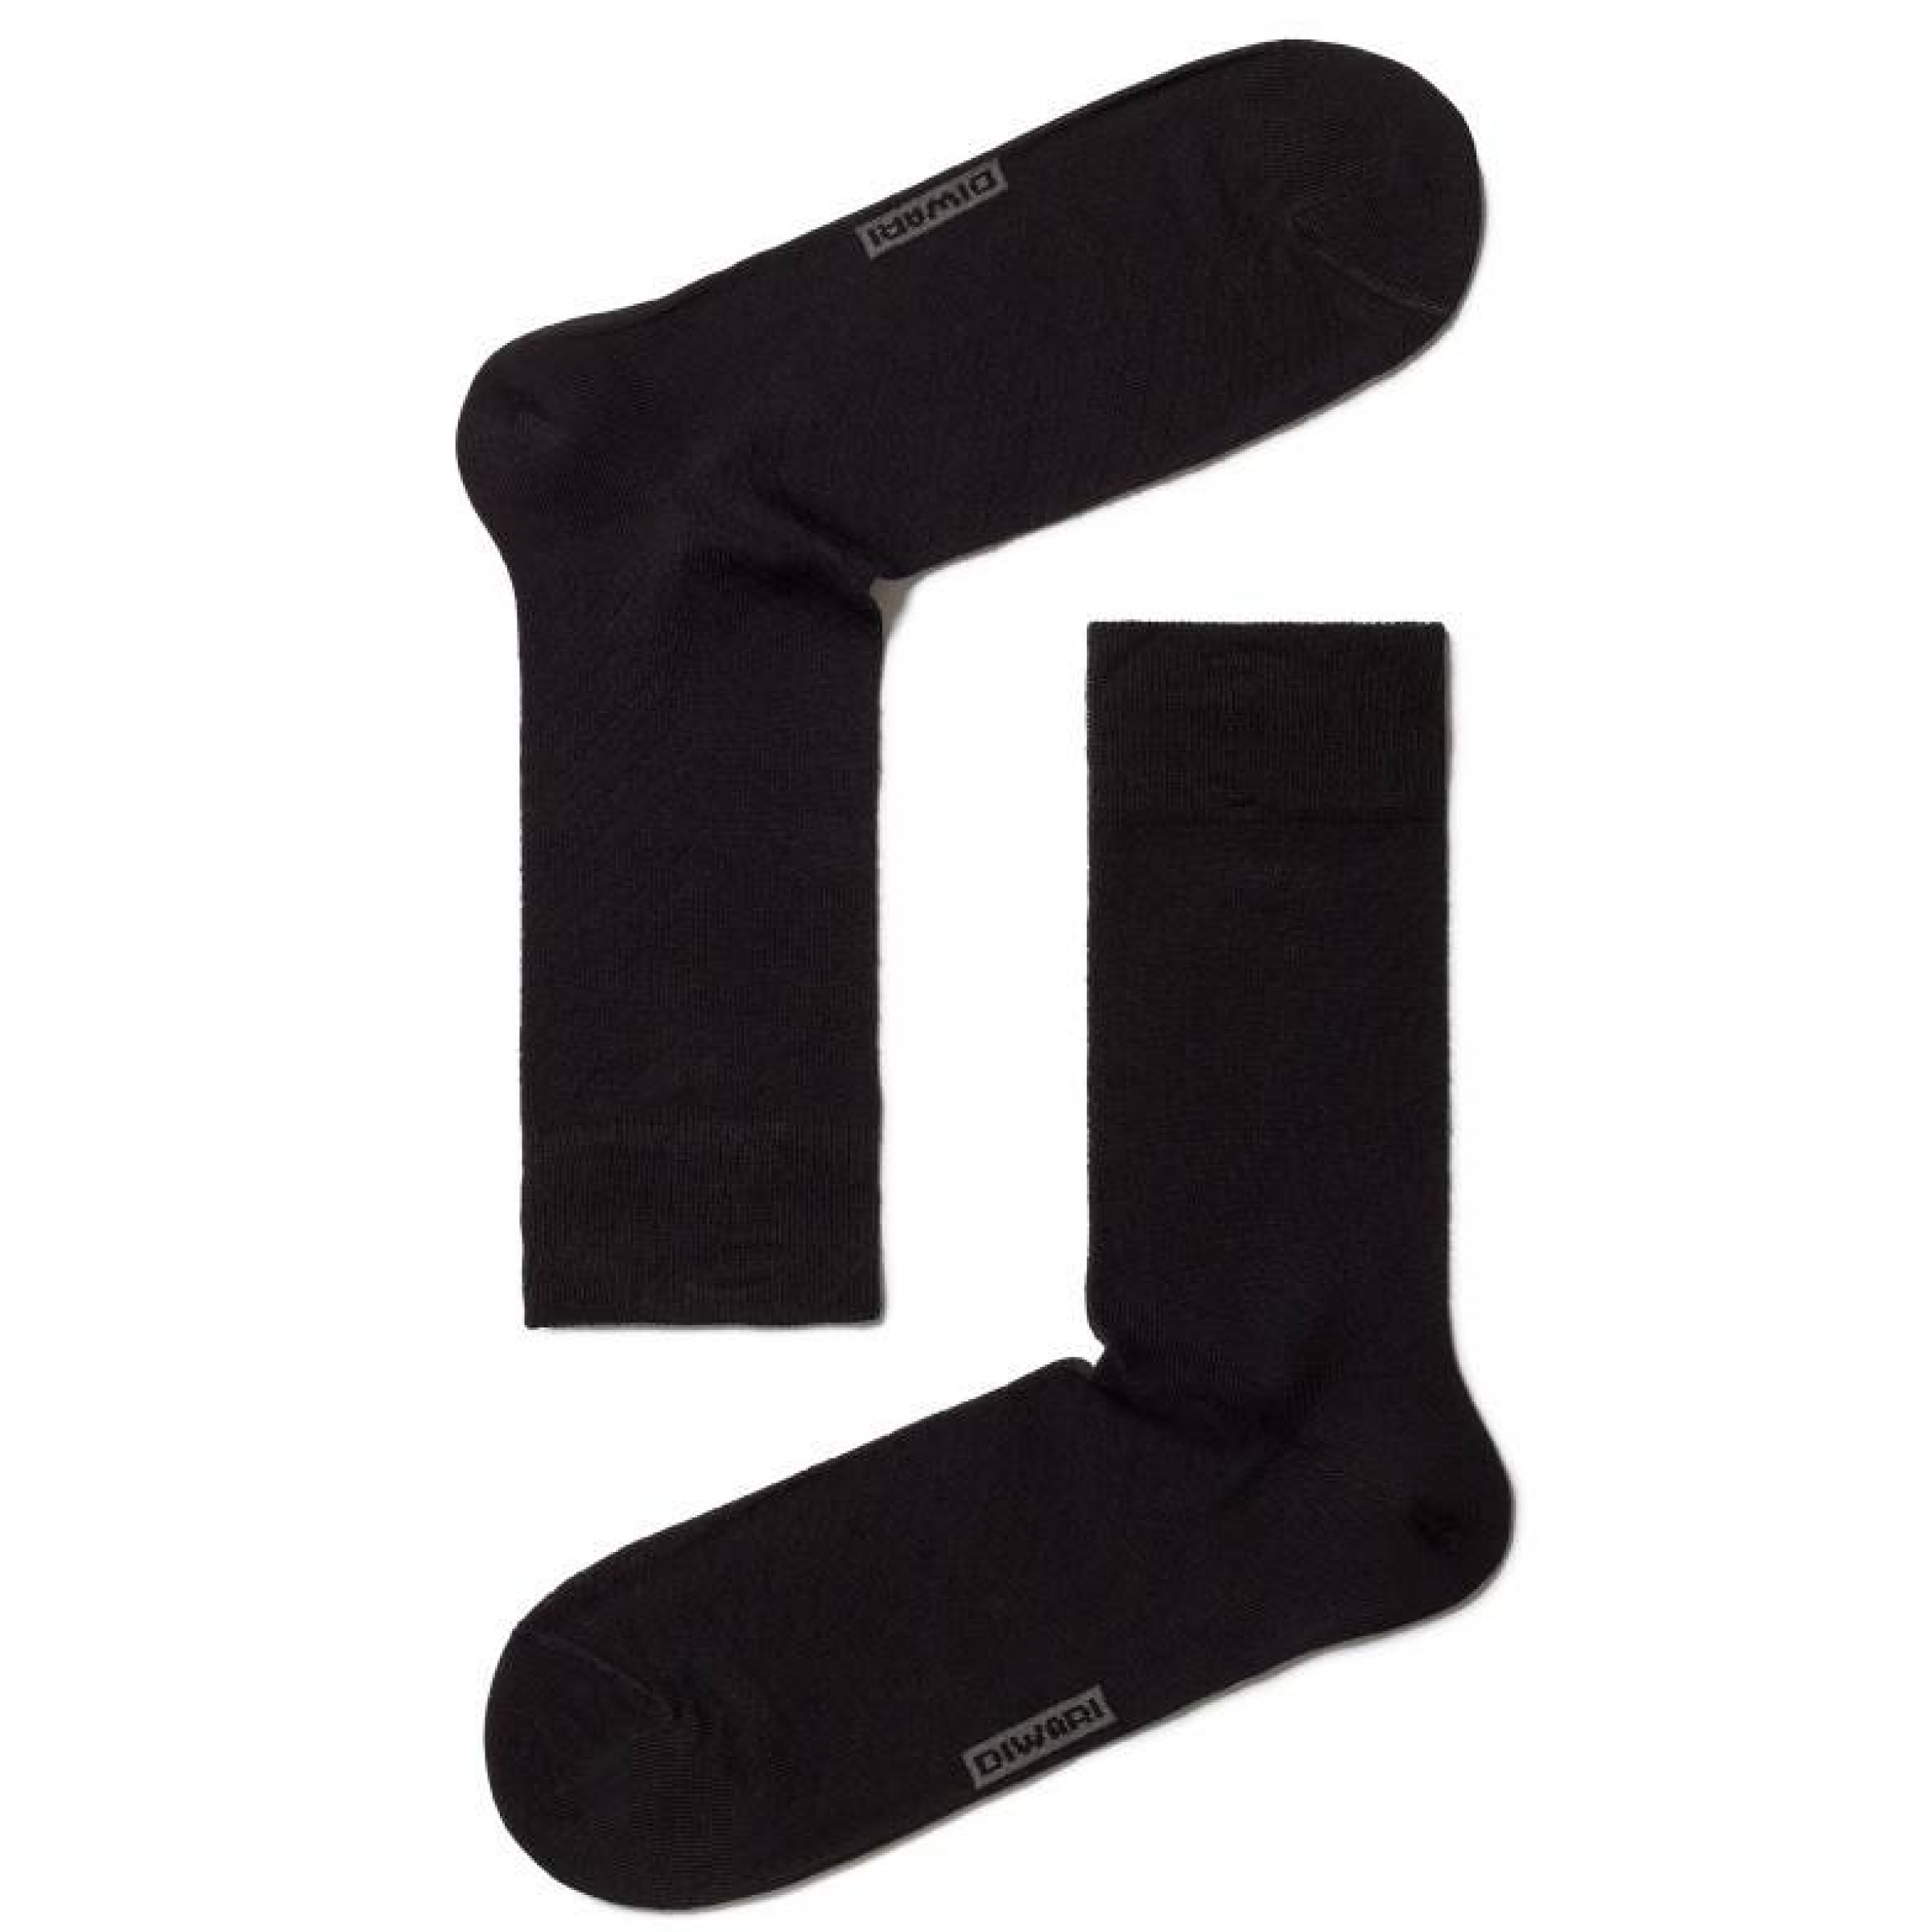 Мужские носки Conte Classic Cool Effect 42-43 размер черный цвет 1 пара